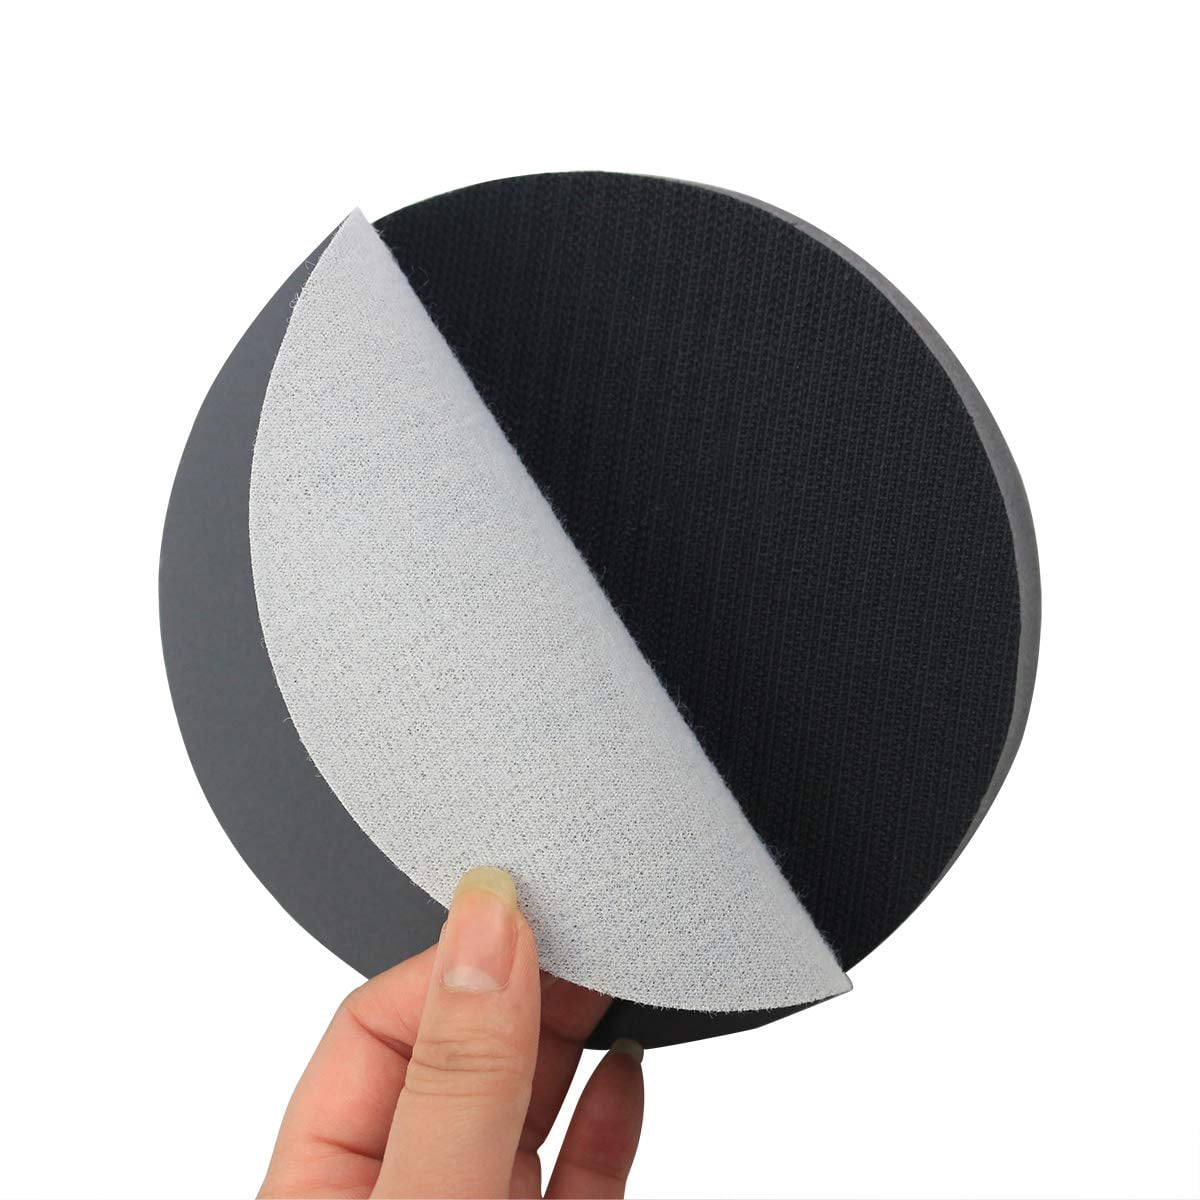 Sanding Discs 6 Inch,400 Grit Wet Dry Sandpaper,Silicon Carbide Hook and Loop Random Orbital Sander Round Sand Paper by MAXMAN,30-Pack